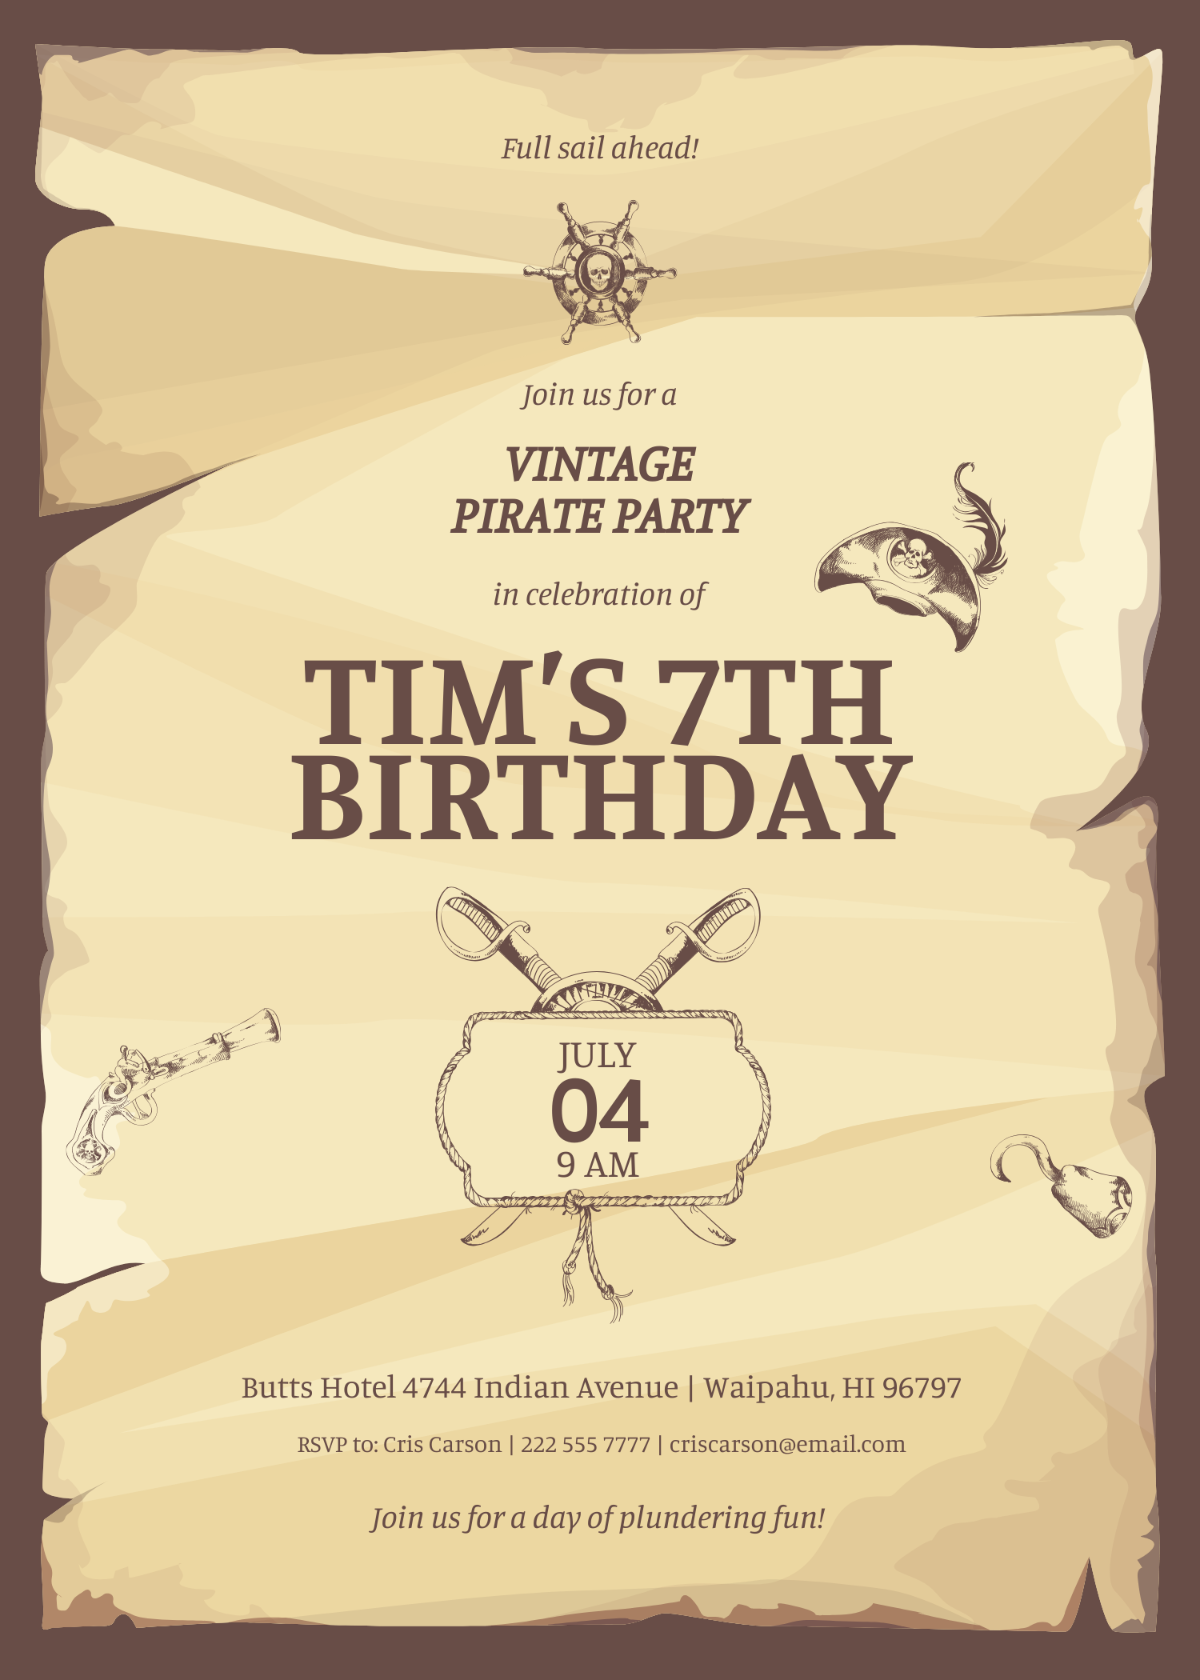 Vintage Pirate Party Invitation